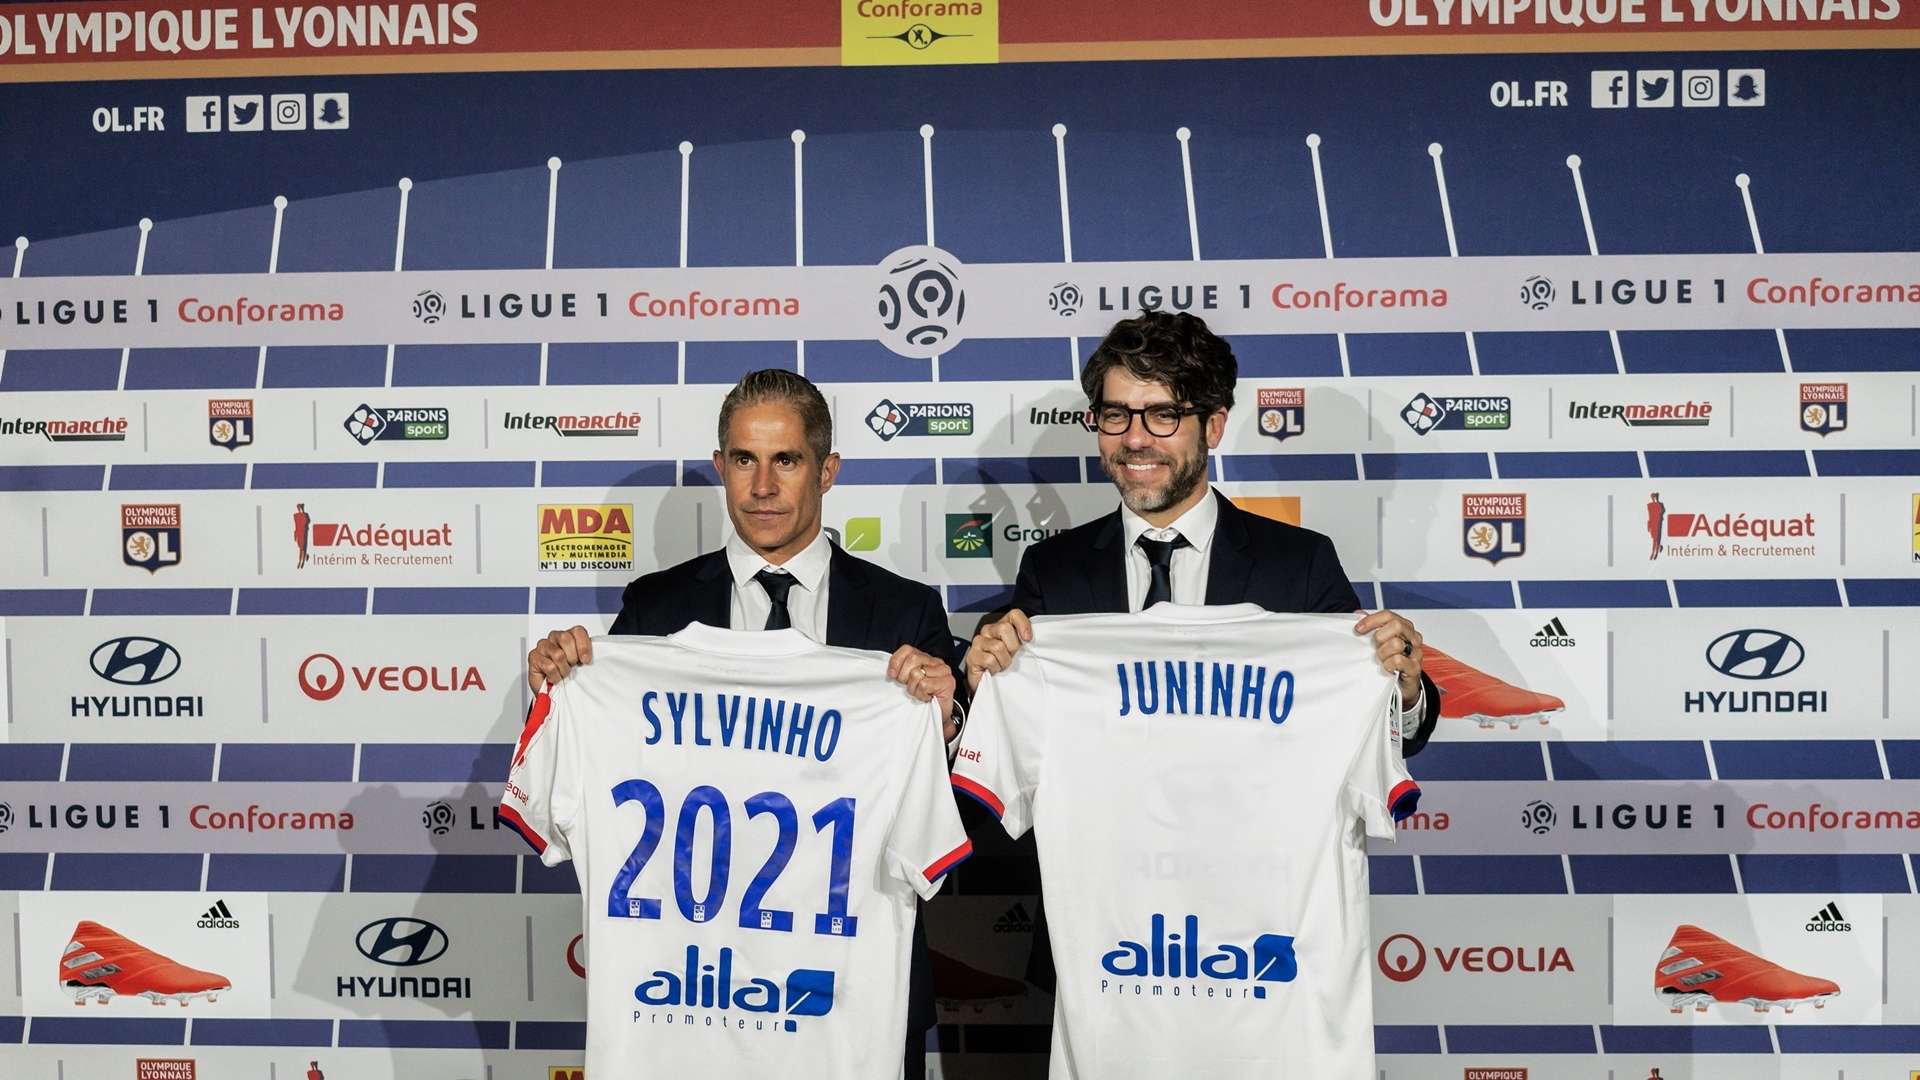 Sylvinho & Juninho Pernambucano - Olympique Lyonnais 2019